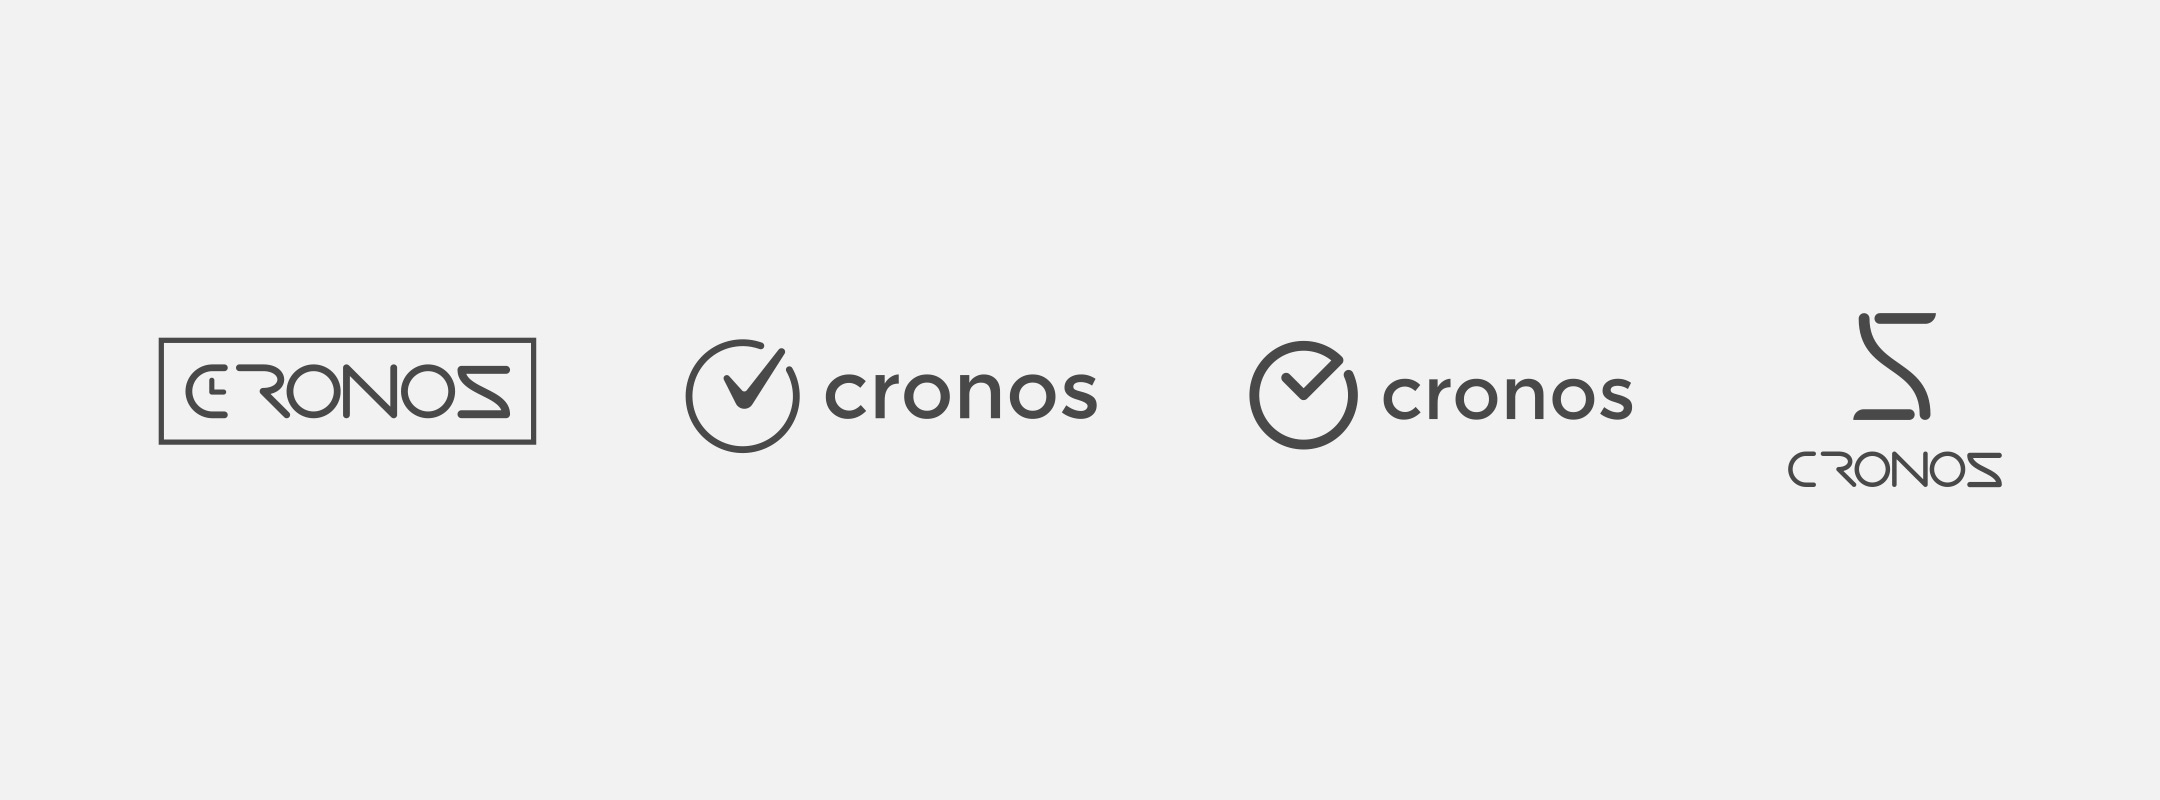 Cronos Brand Process 1